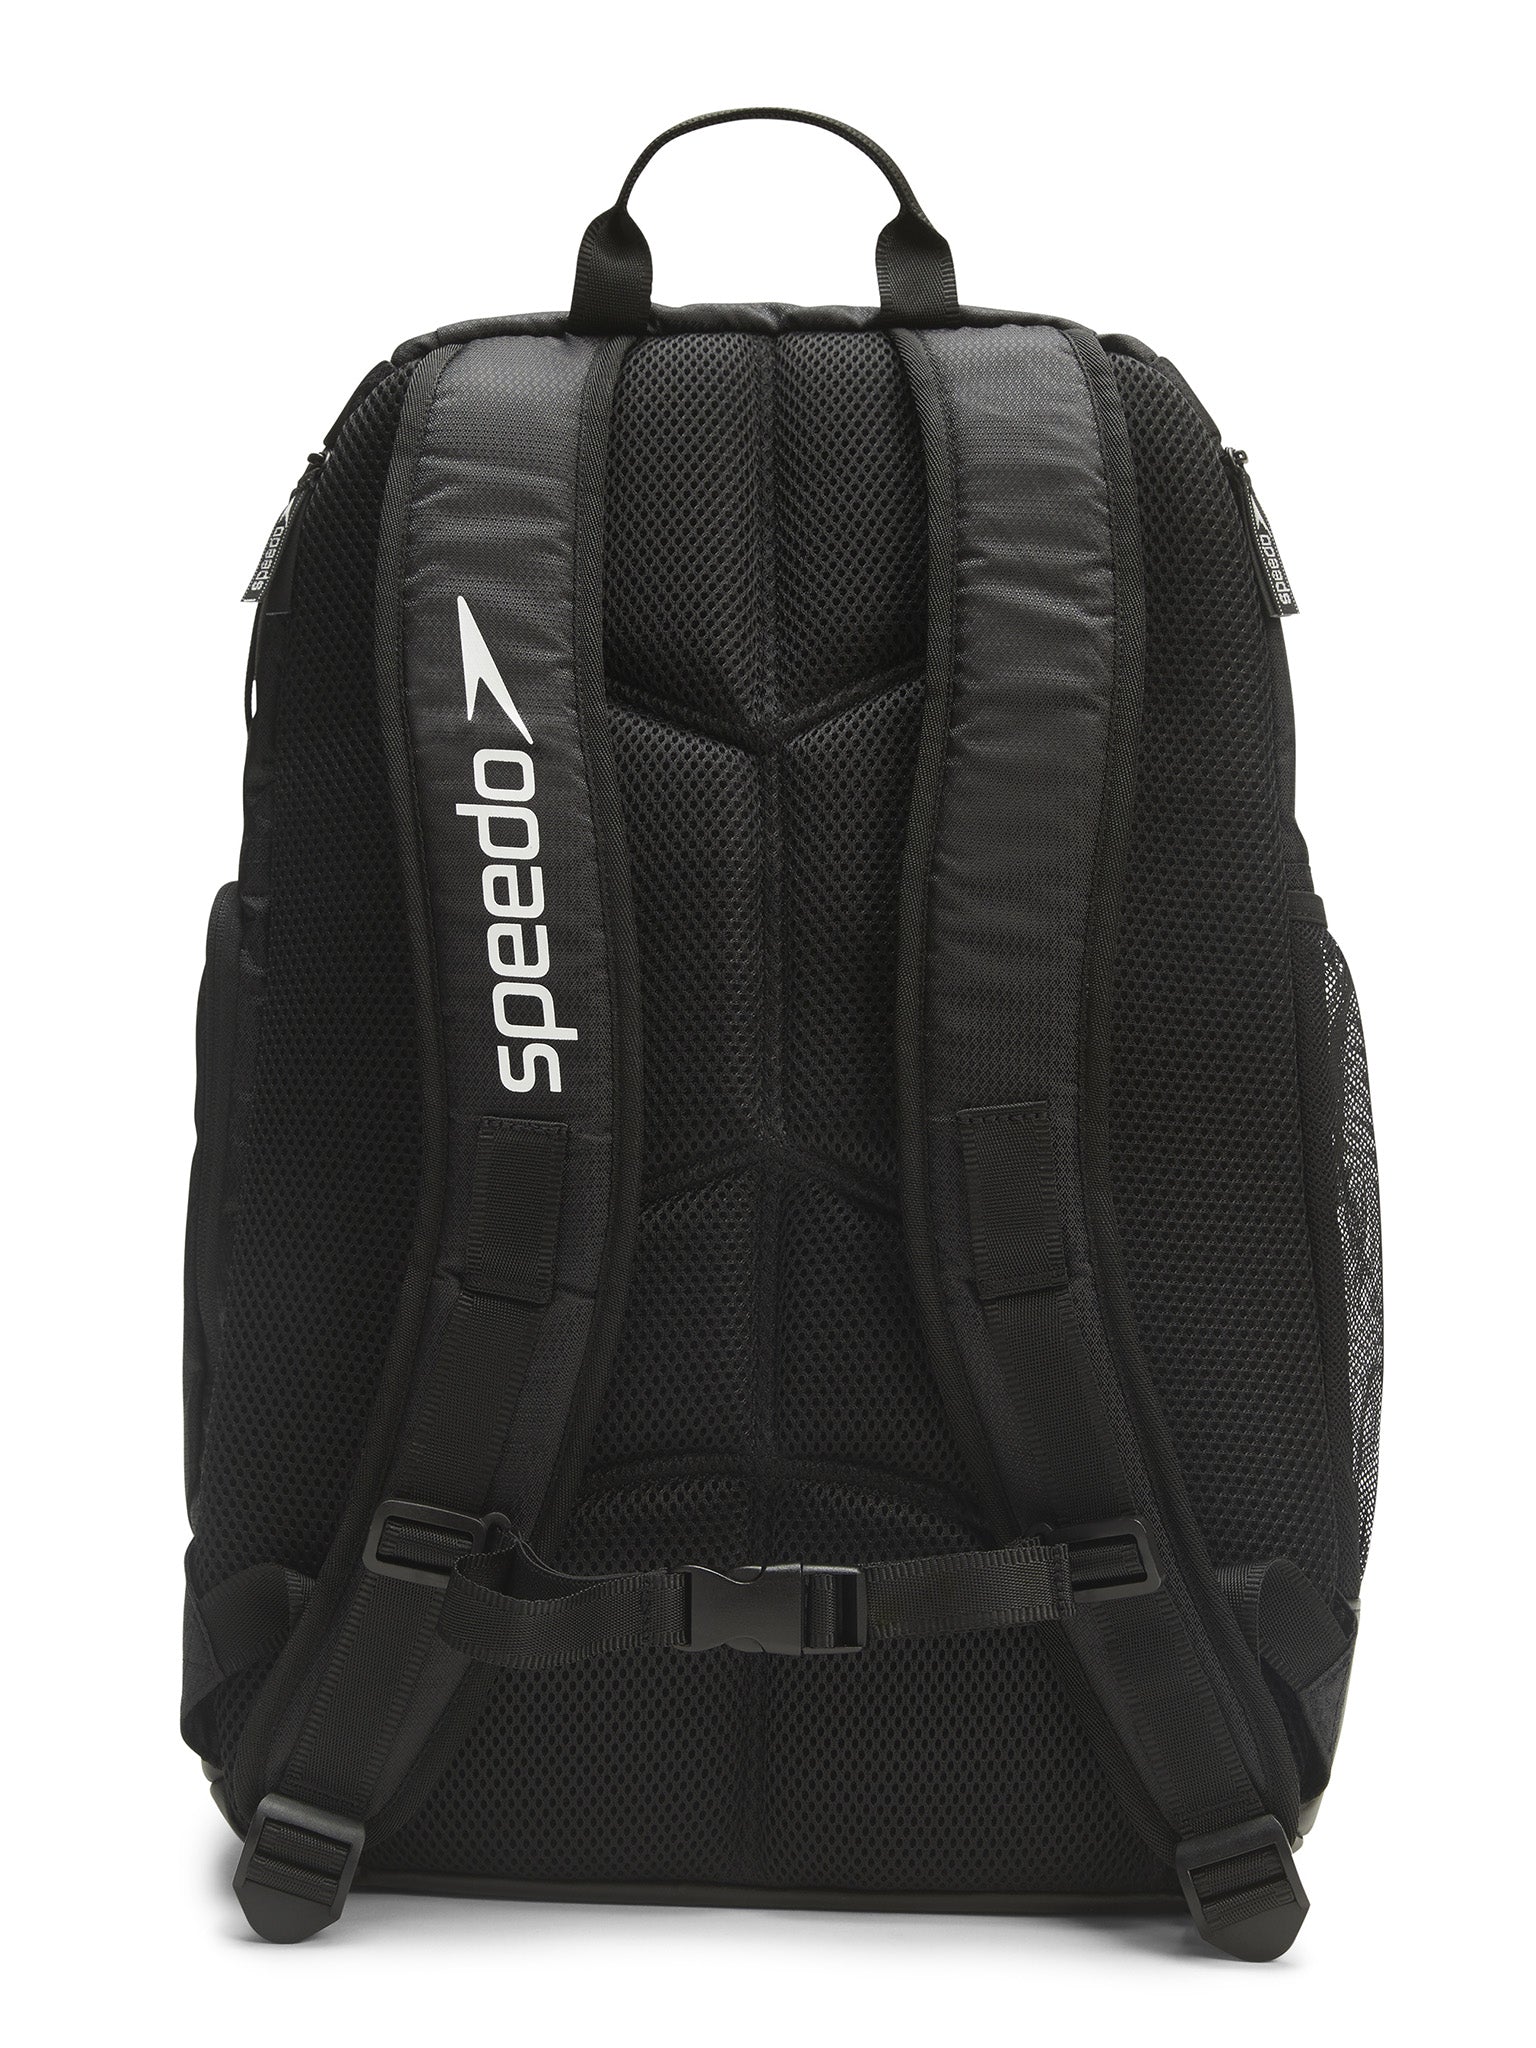 Teamster 2.0 Backpack - Black